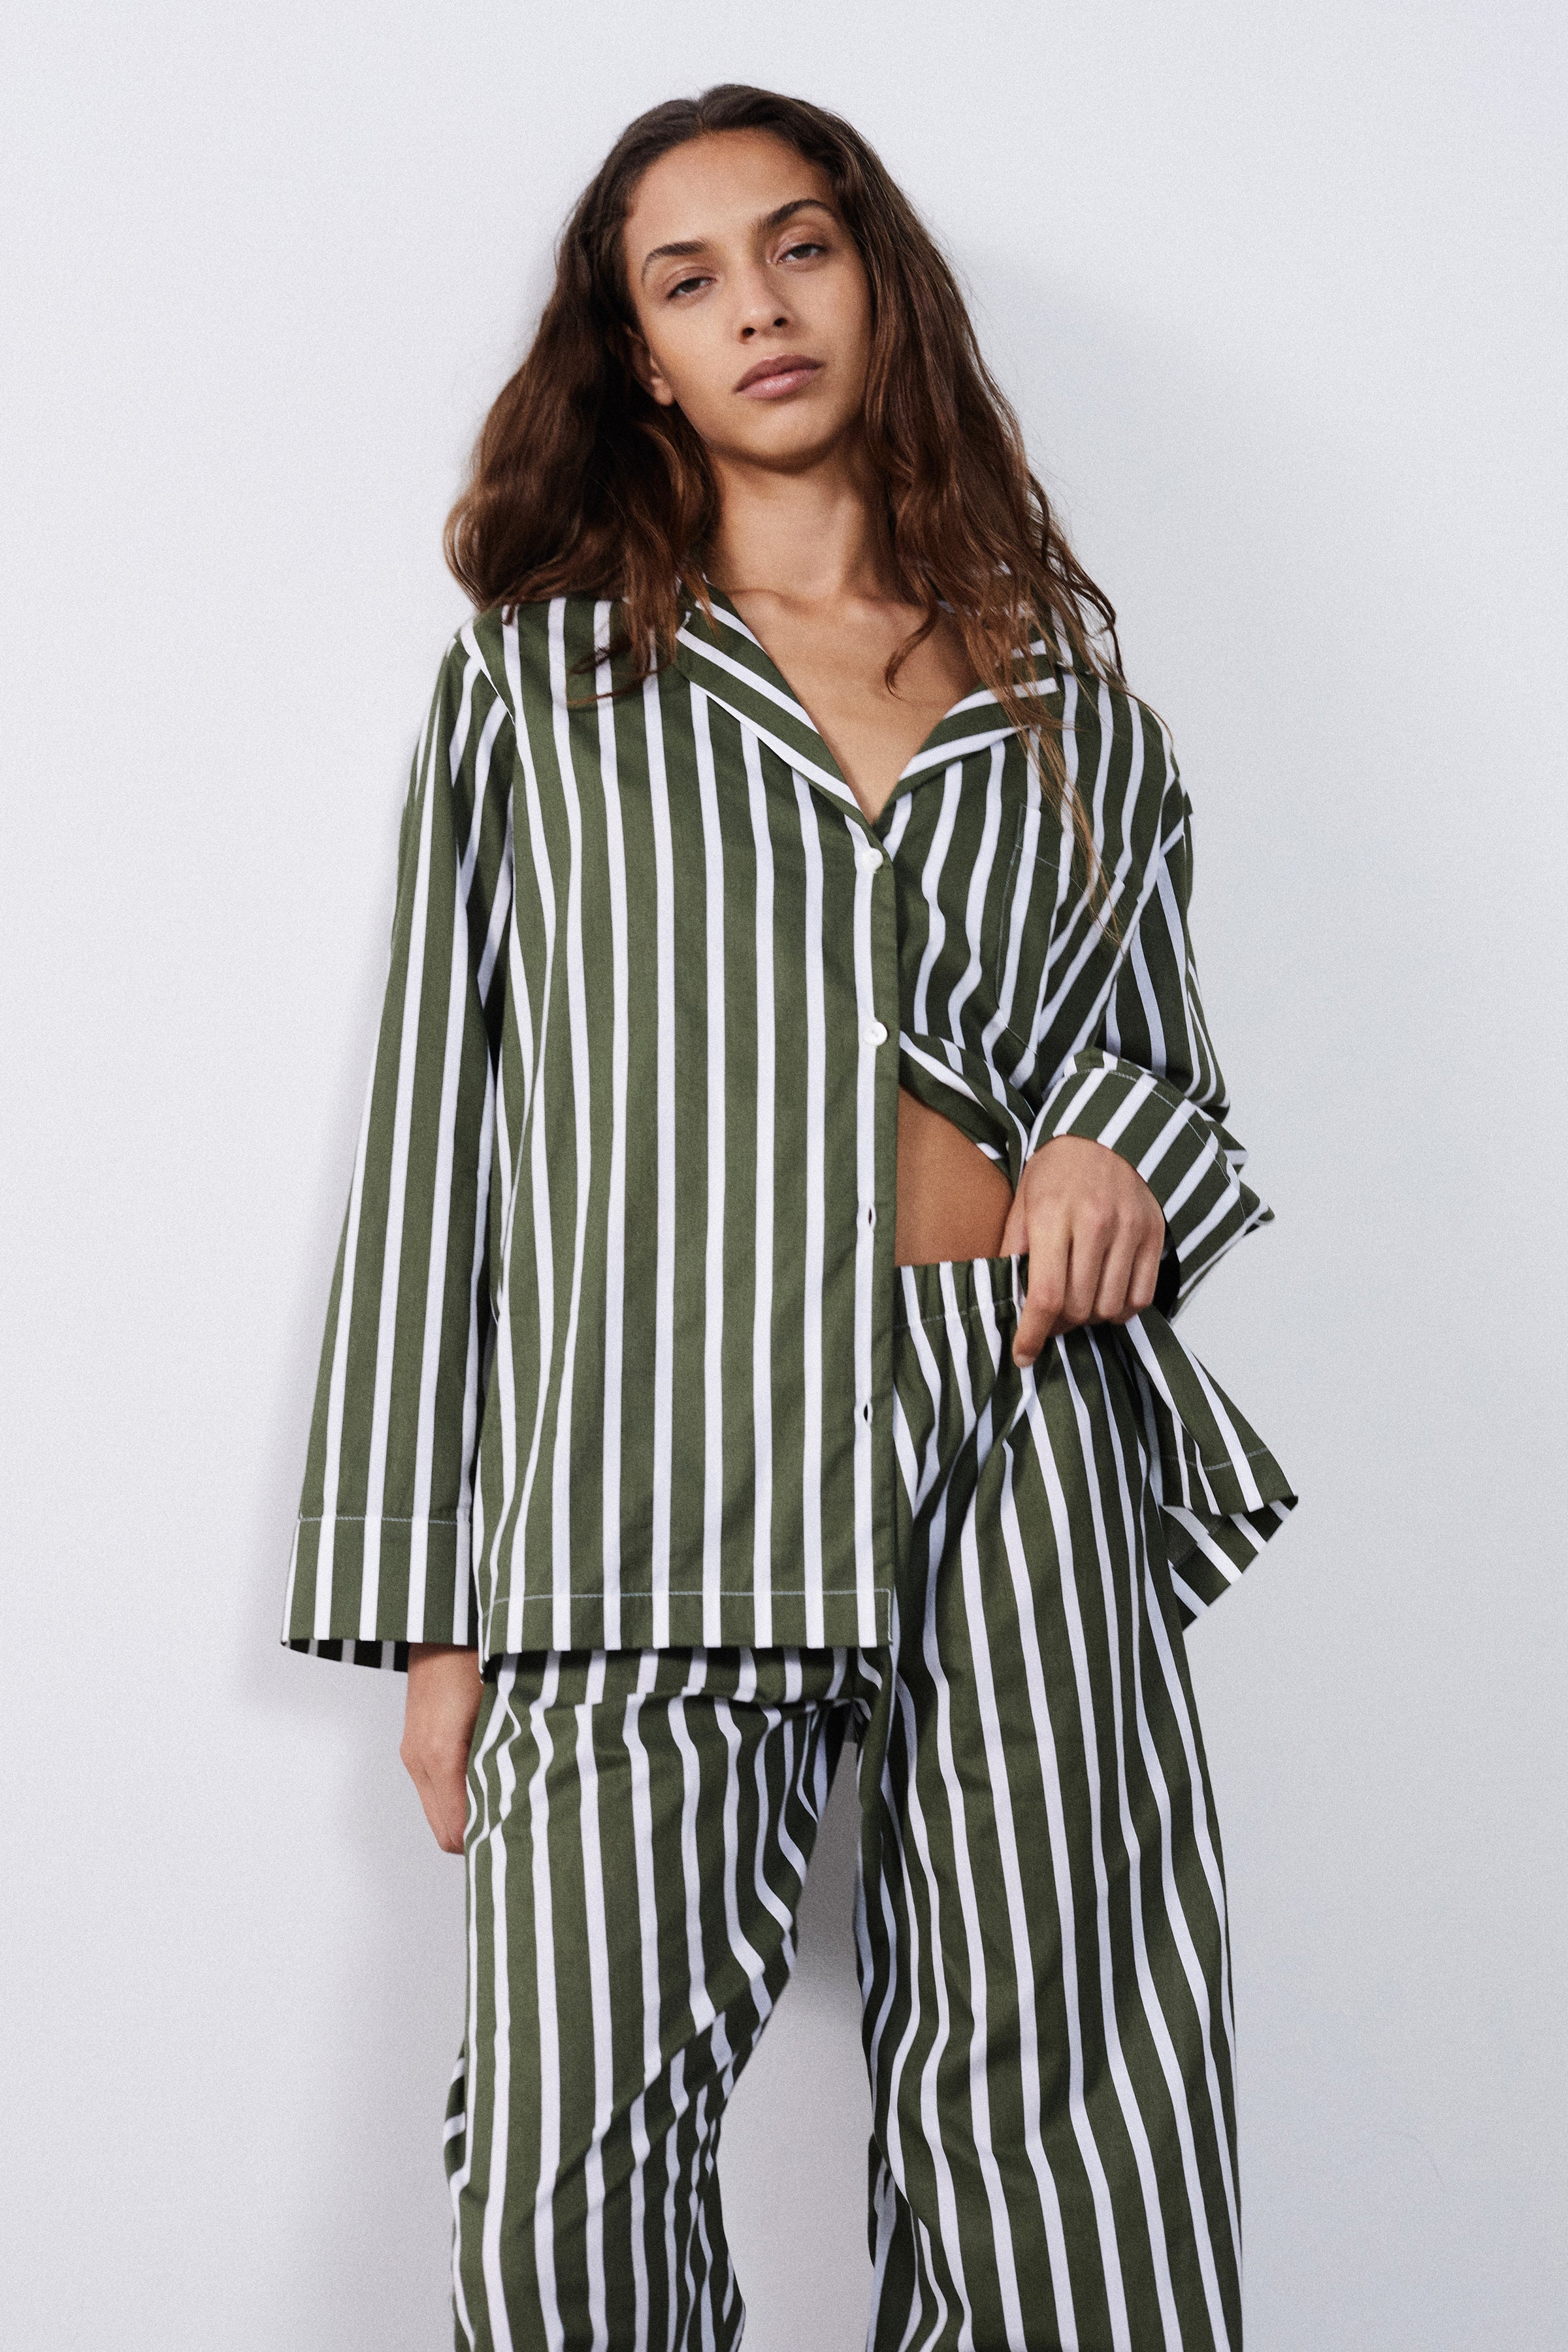 Striped Olive Pyjamas - Green & White Striped Pyjamas - Women's Green  Striped PJs – HONNA